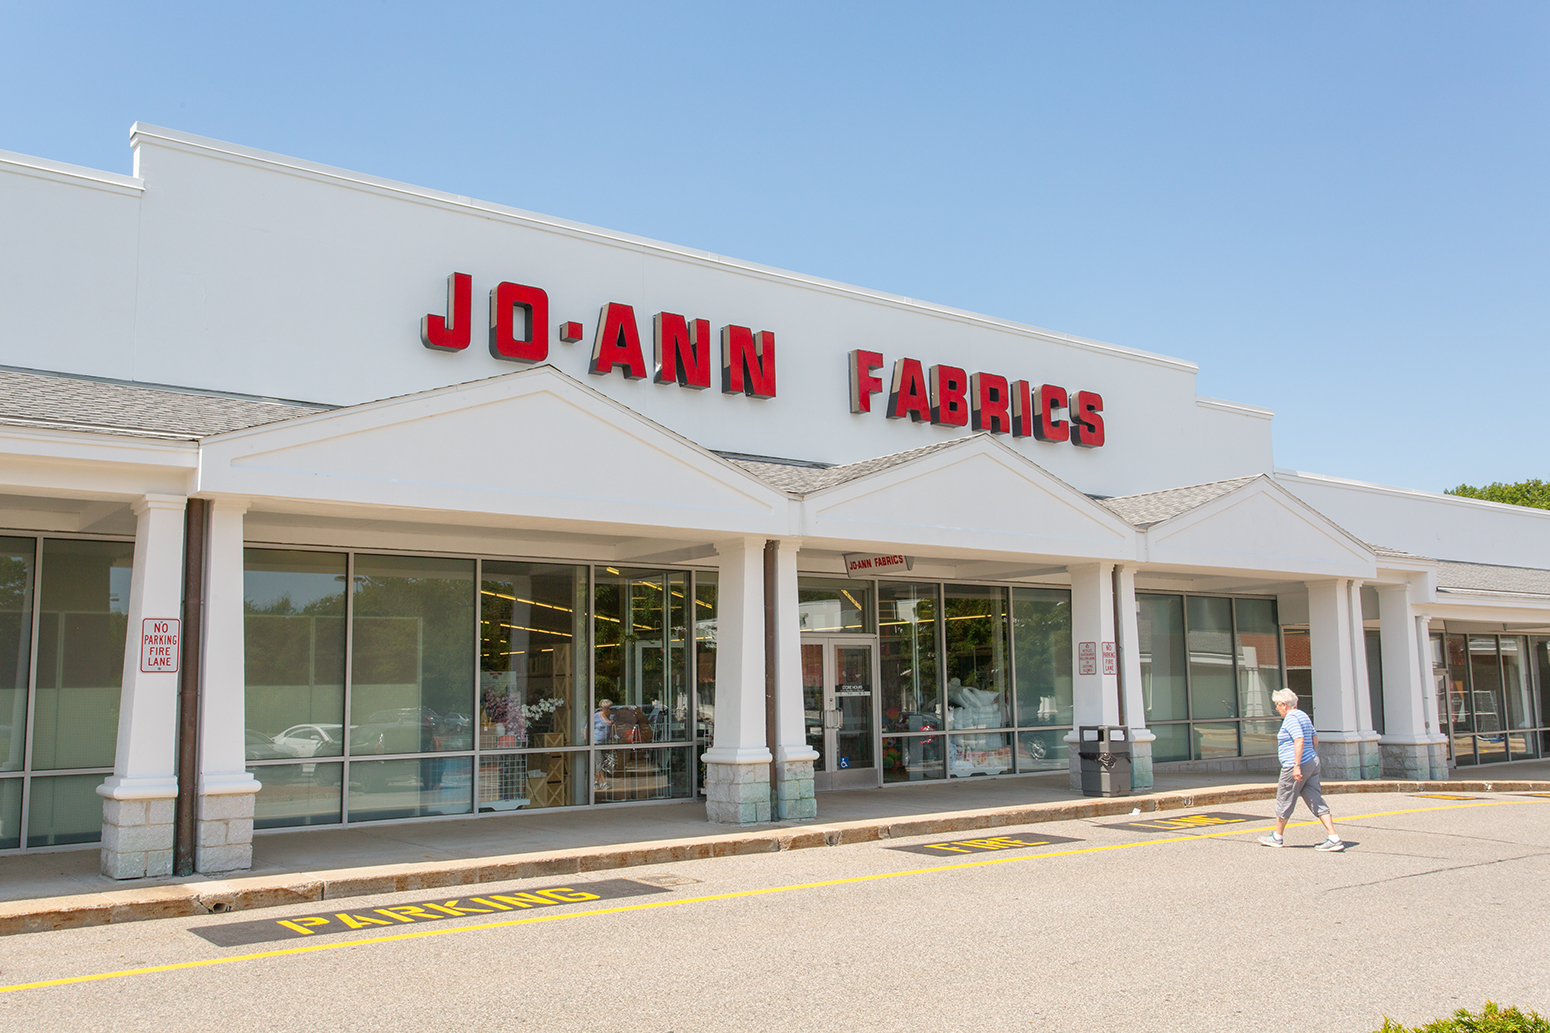 Joann Frabrics and Crafts at Seacoast Shopping Center